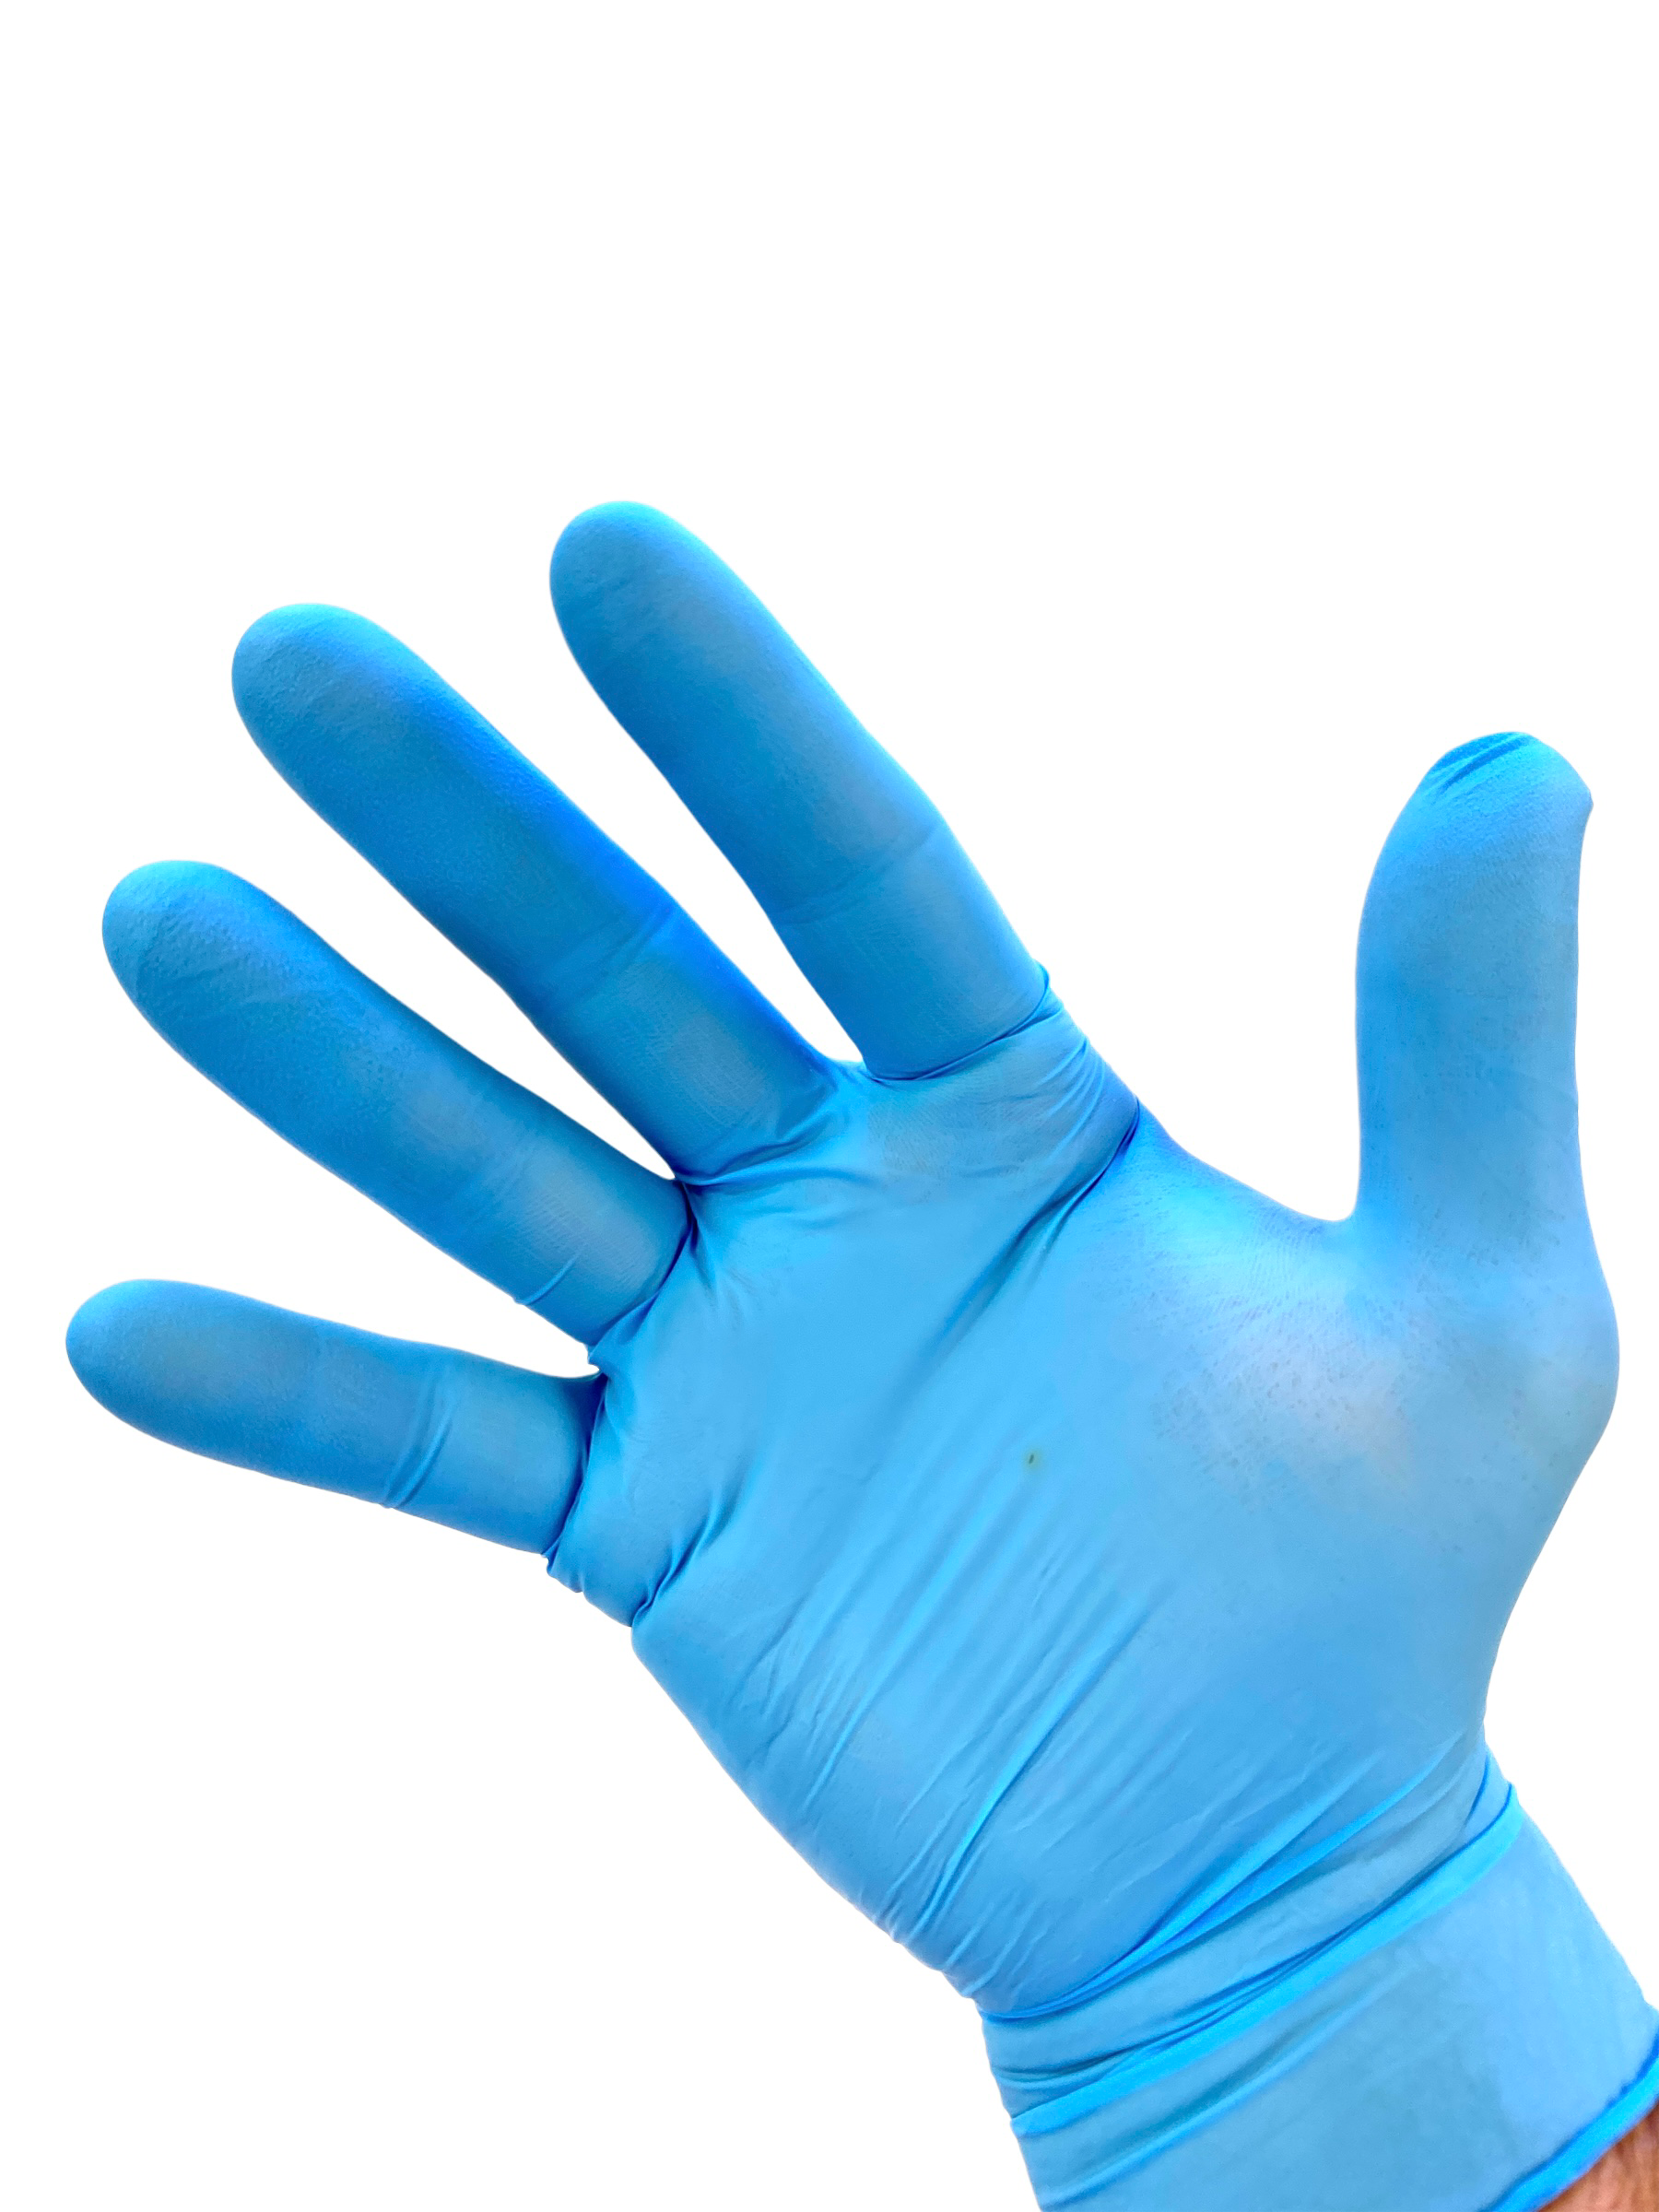 Glovepak Skye 100 Nitrile Powder Free Exam Gloves on Hand